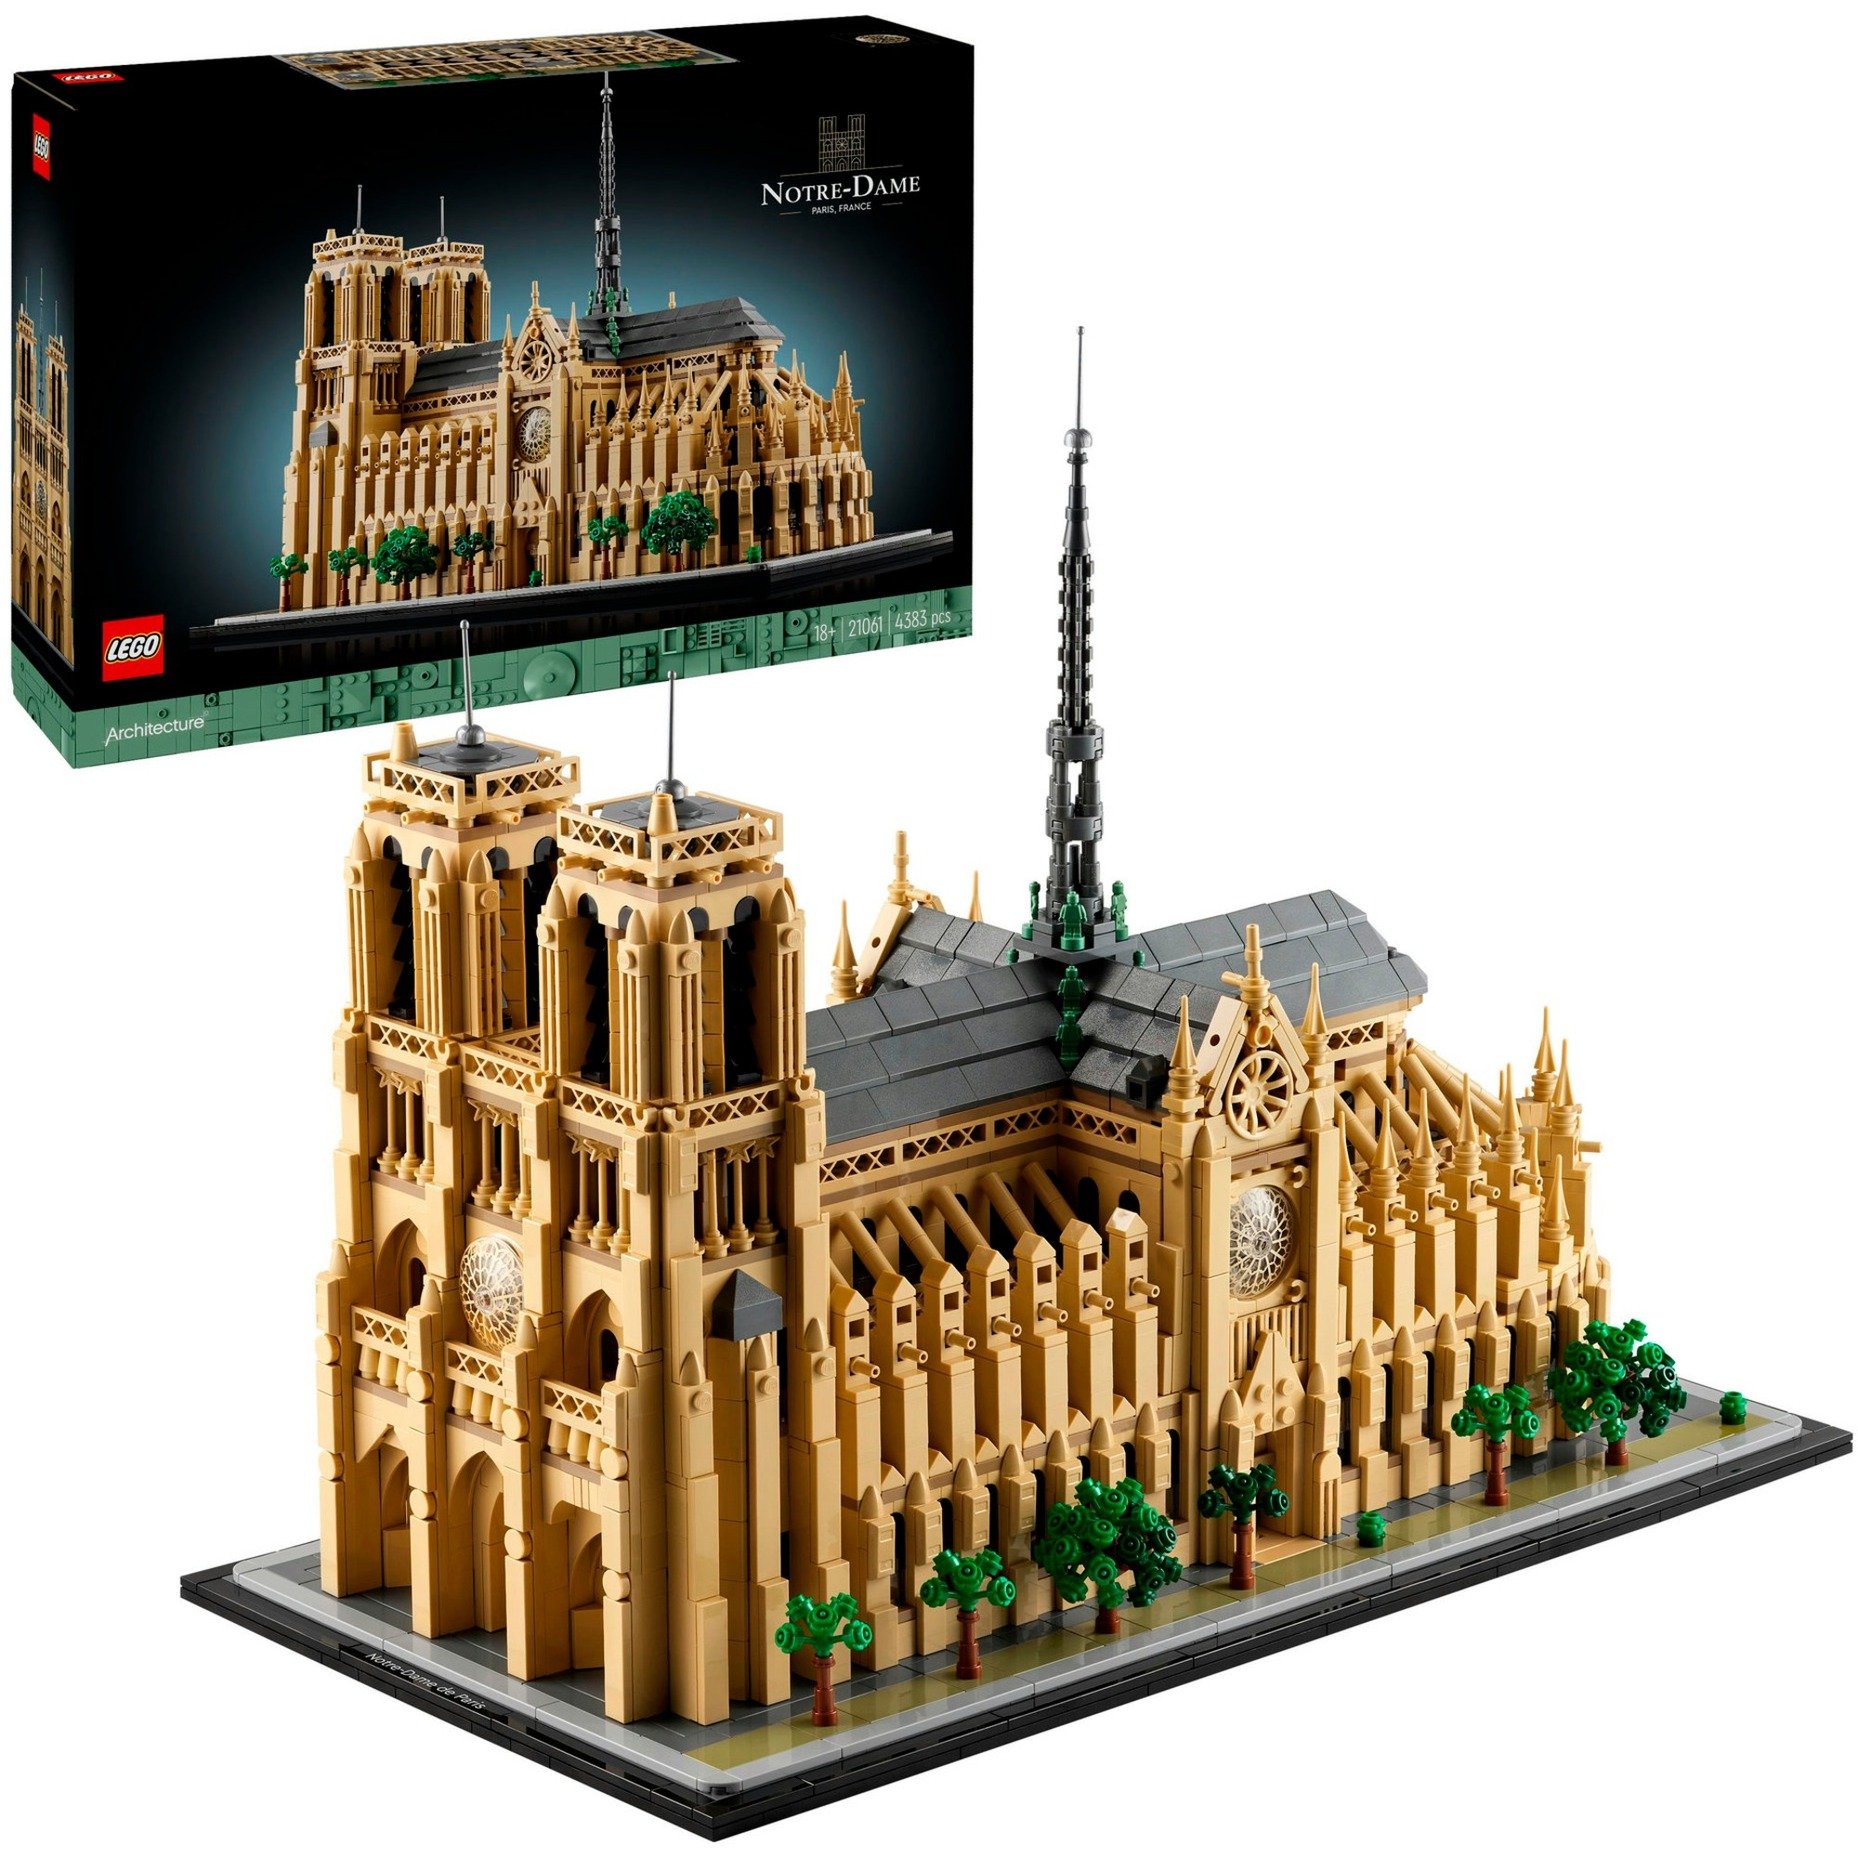 21061 Architecture Notre-Dame de Paris, Konstruktionsspielzeug von Lego